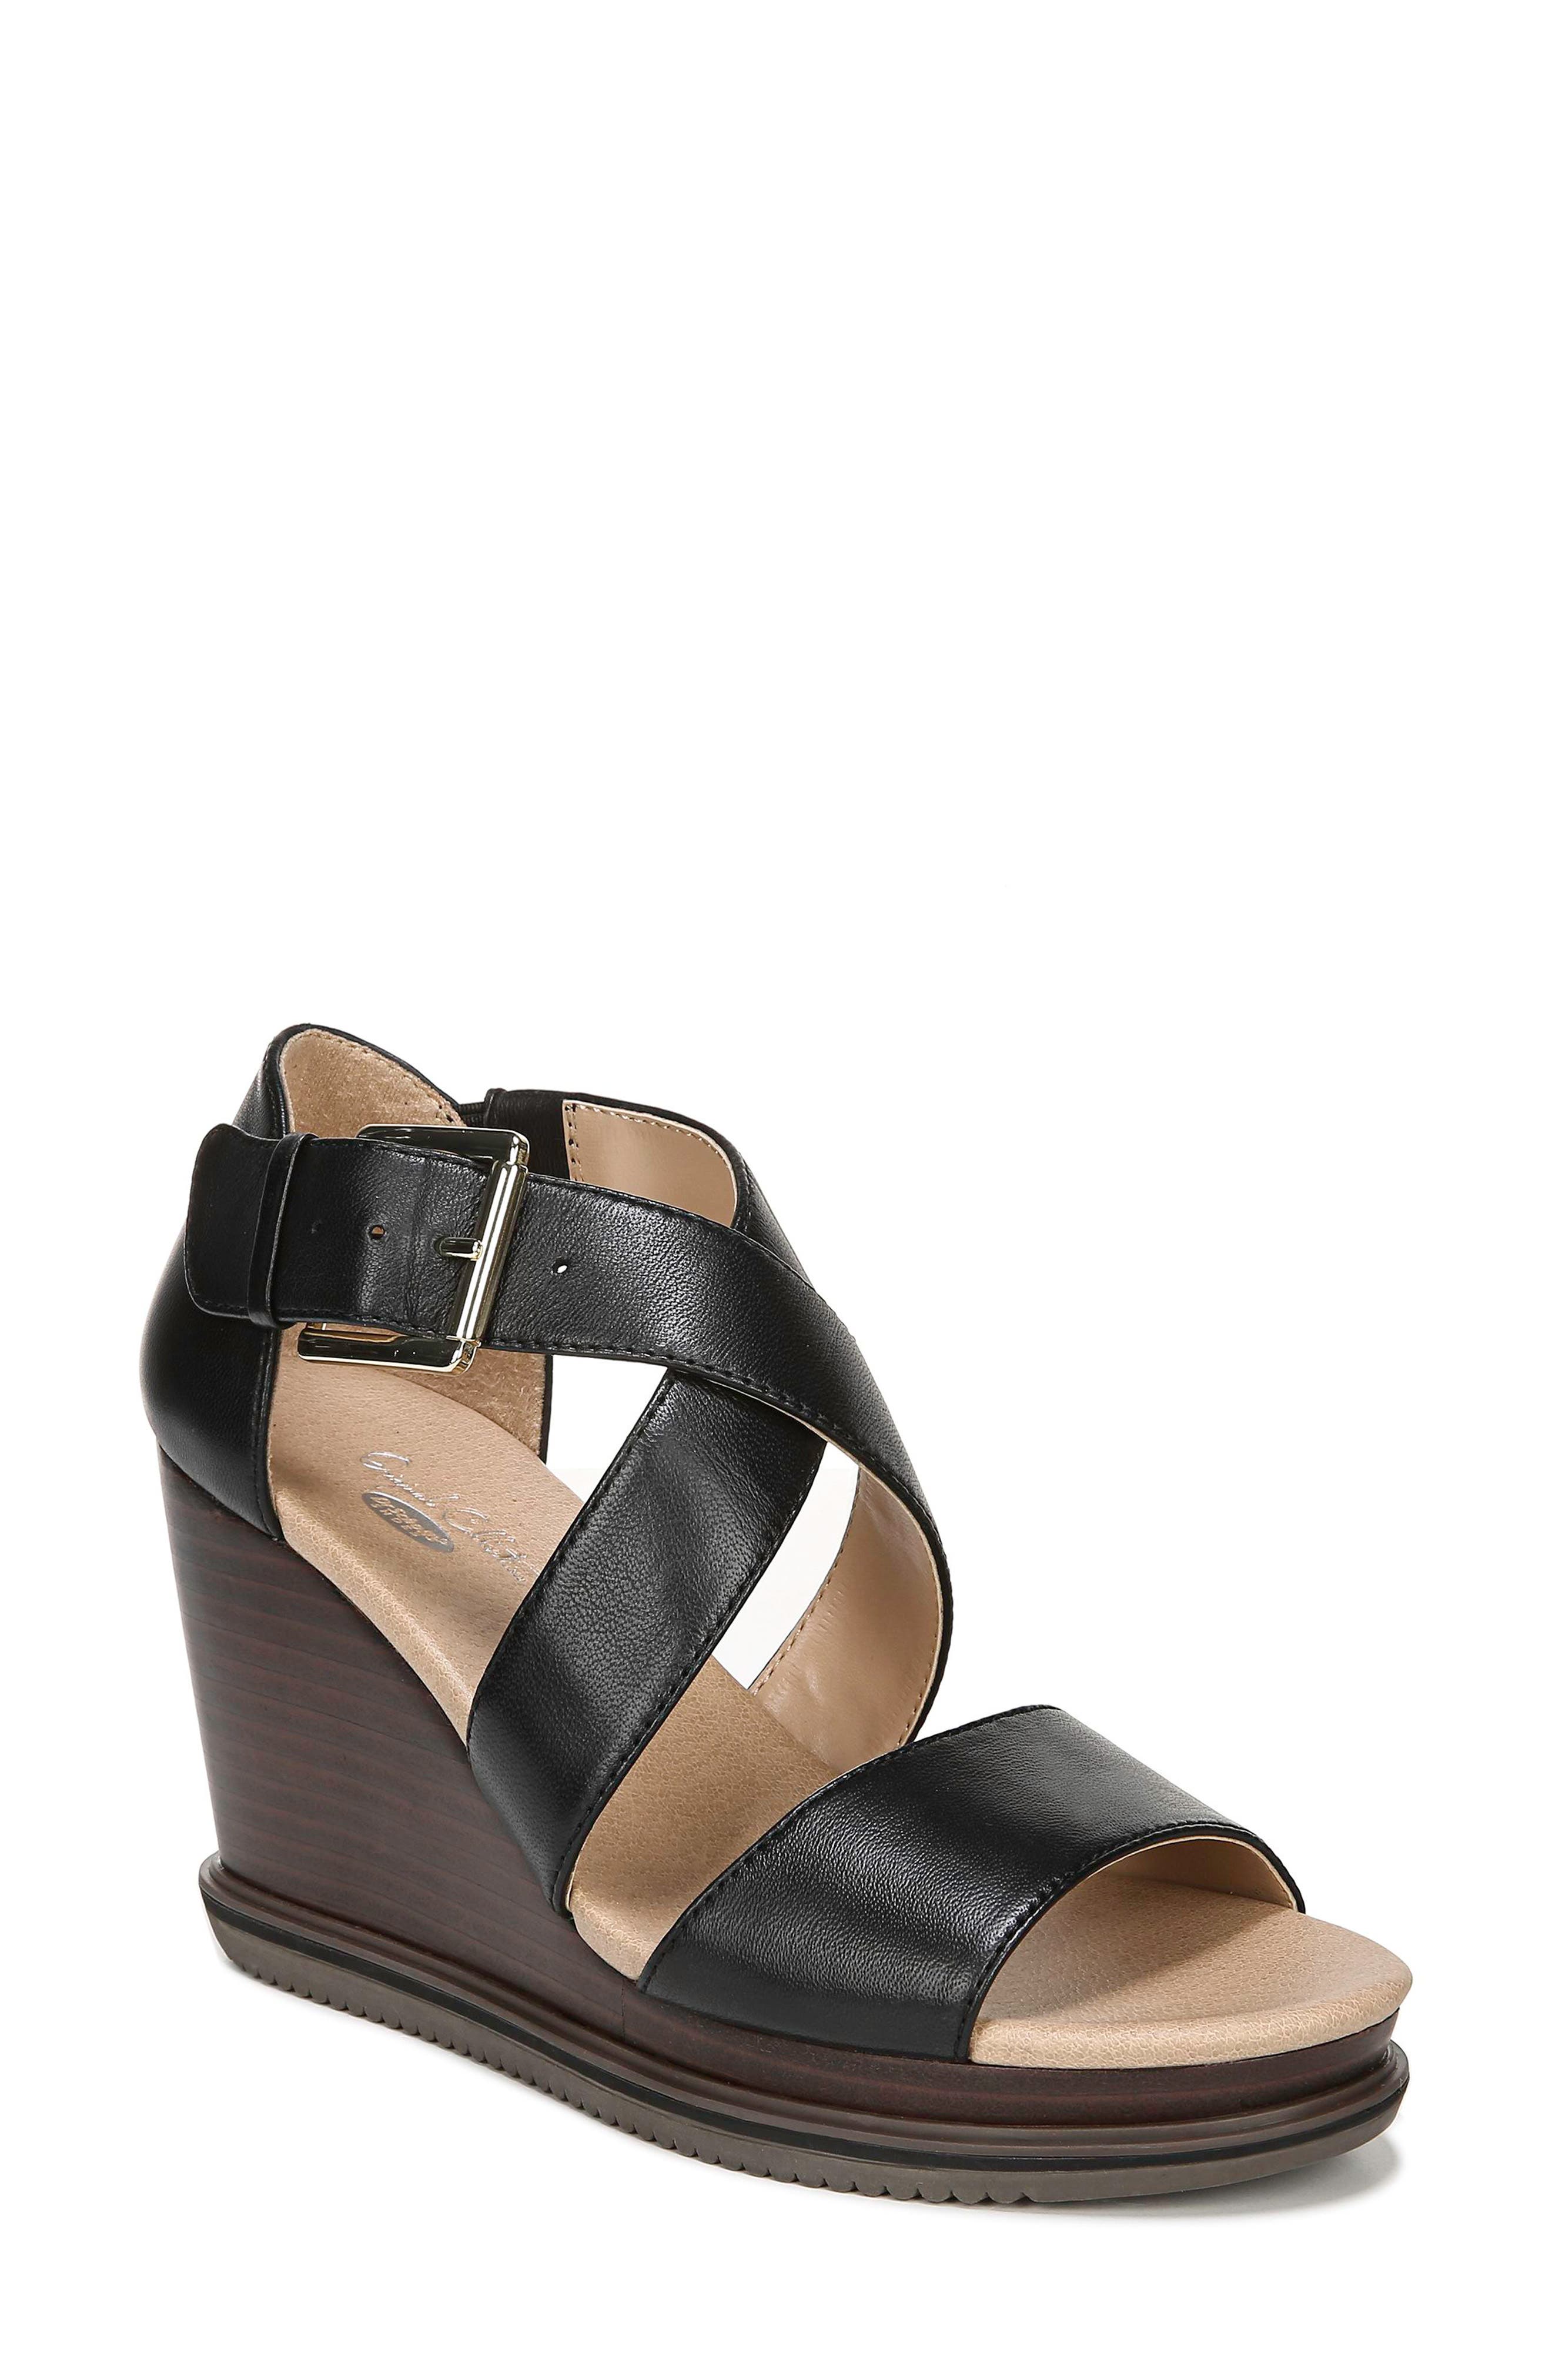 UPC 742976000034 product image for Women's Dr. Scholl's Sweet Escape Wedge Sandal, Size 11 M - Black | upcitemdb.com